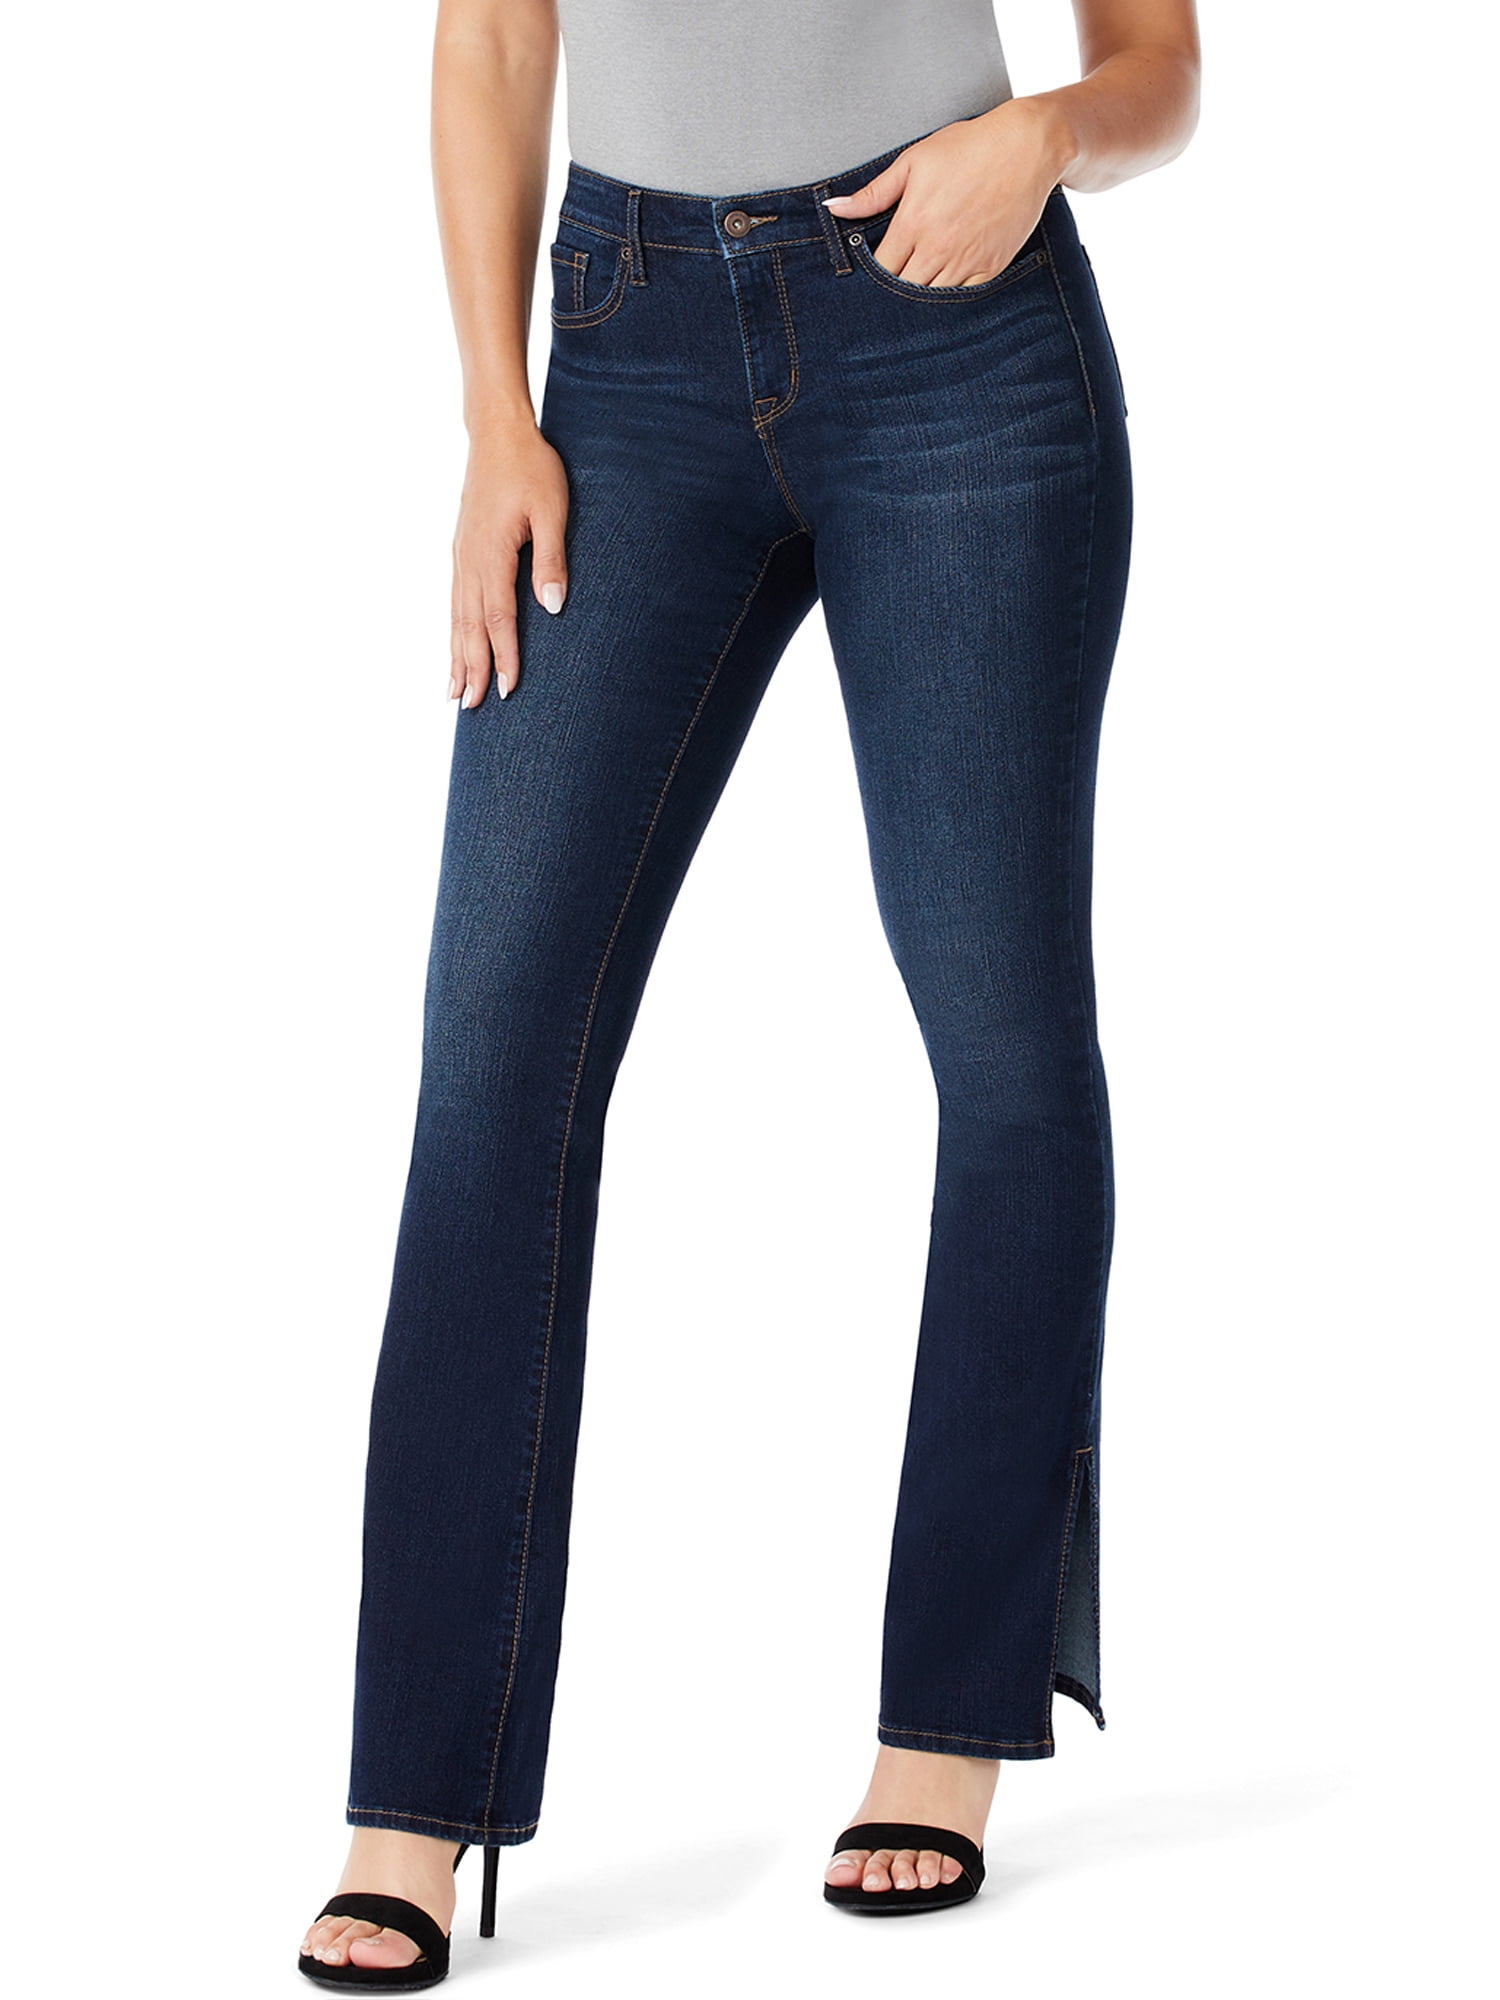 Sofia Jeans Women's Marisol Mid Rise Slit Hem Bootcut Jeans - Walmart.com